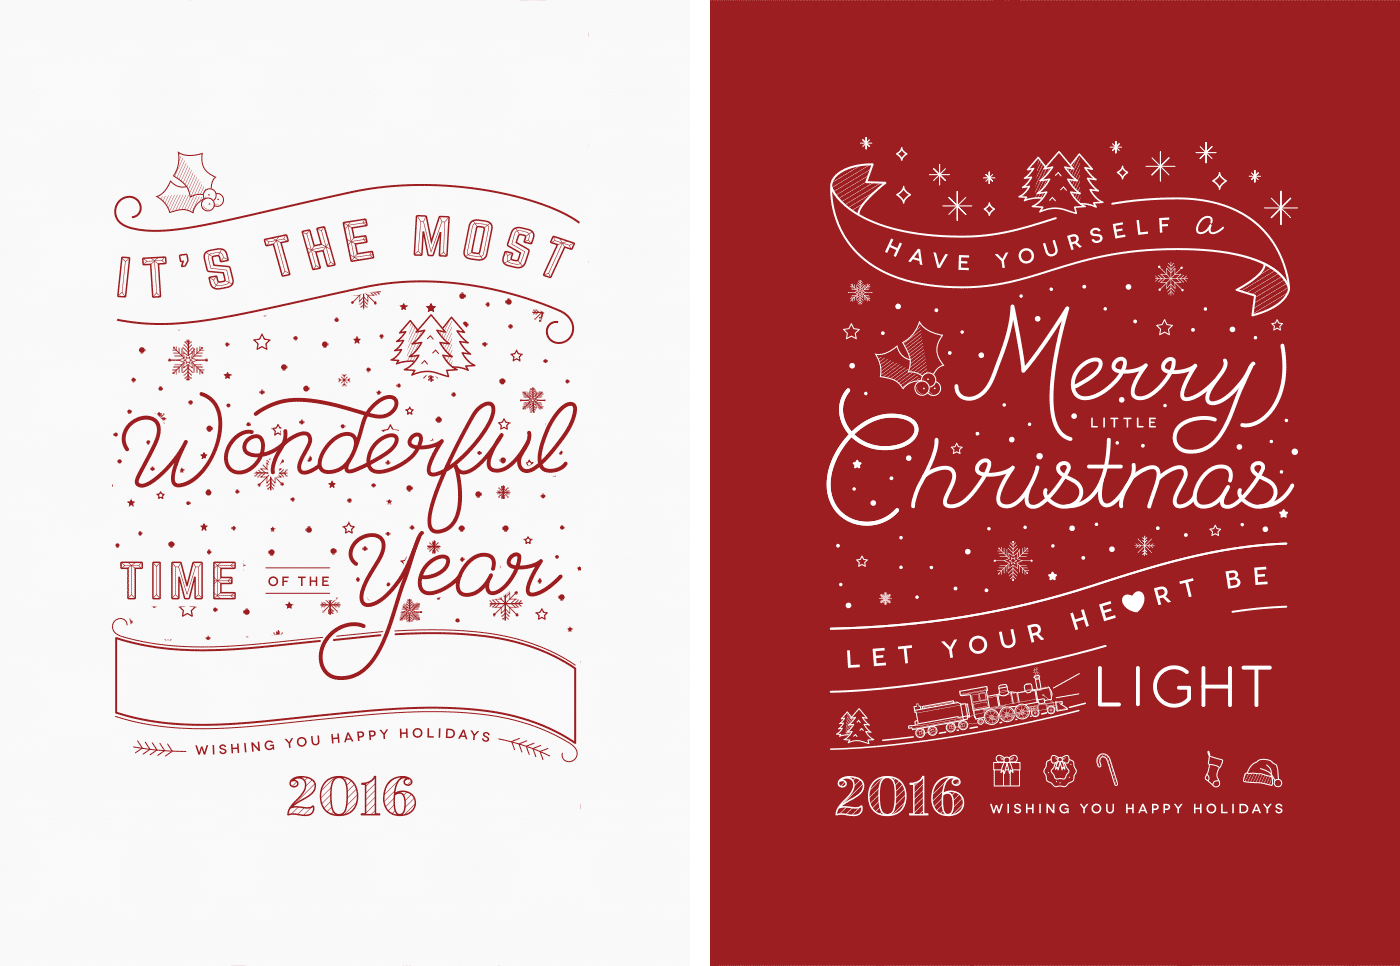 merry Christmas card season greetings Lyrics lettering icons colors inspire